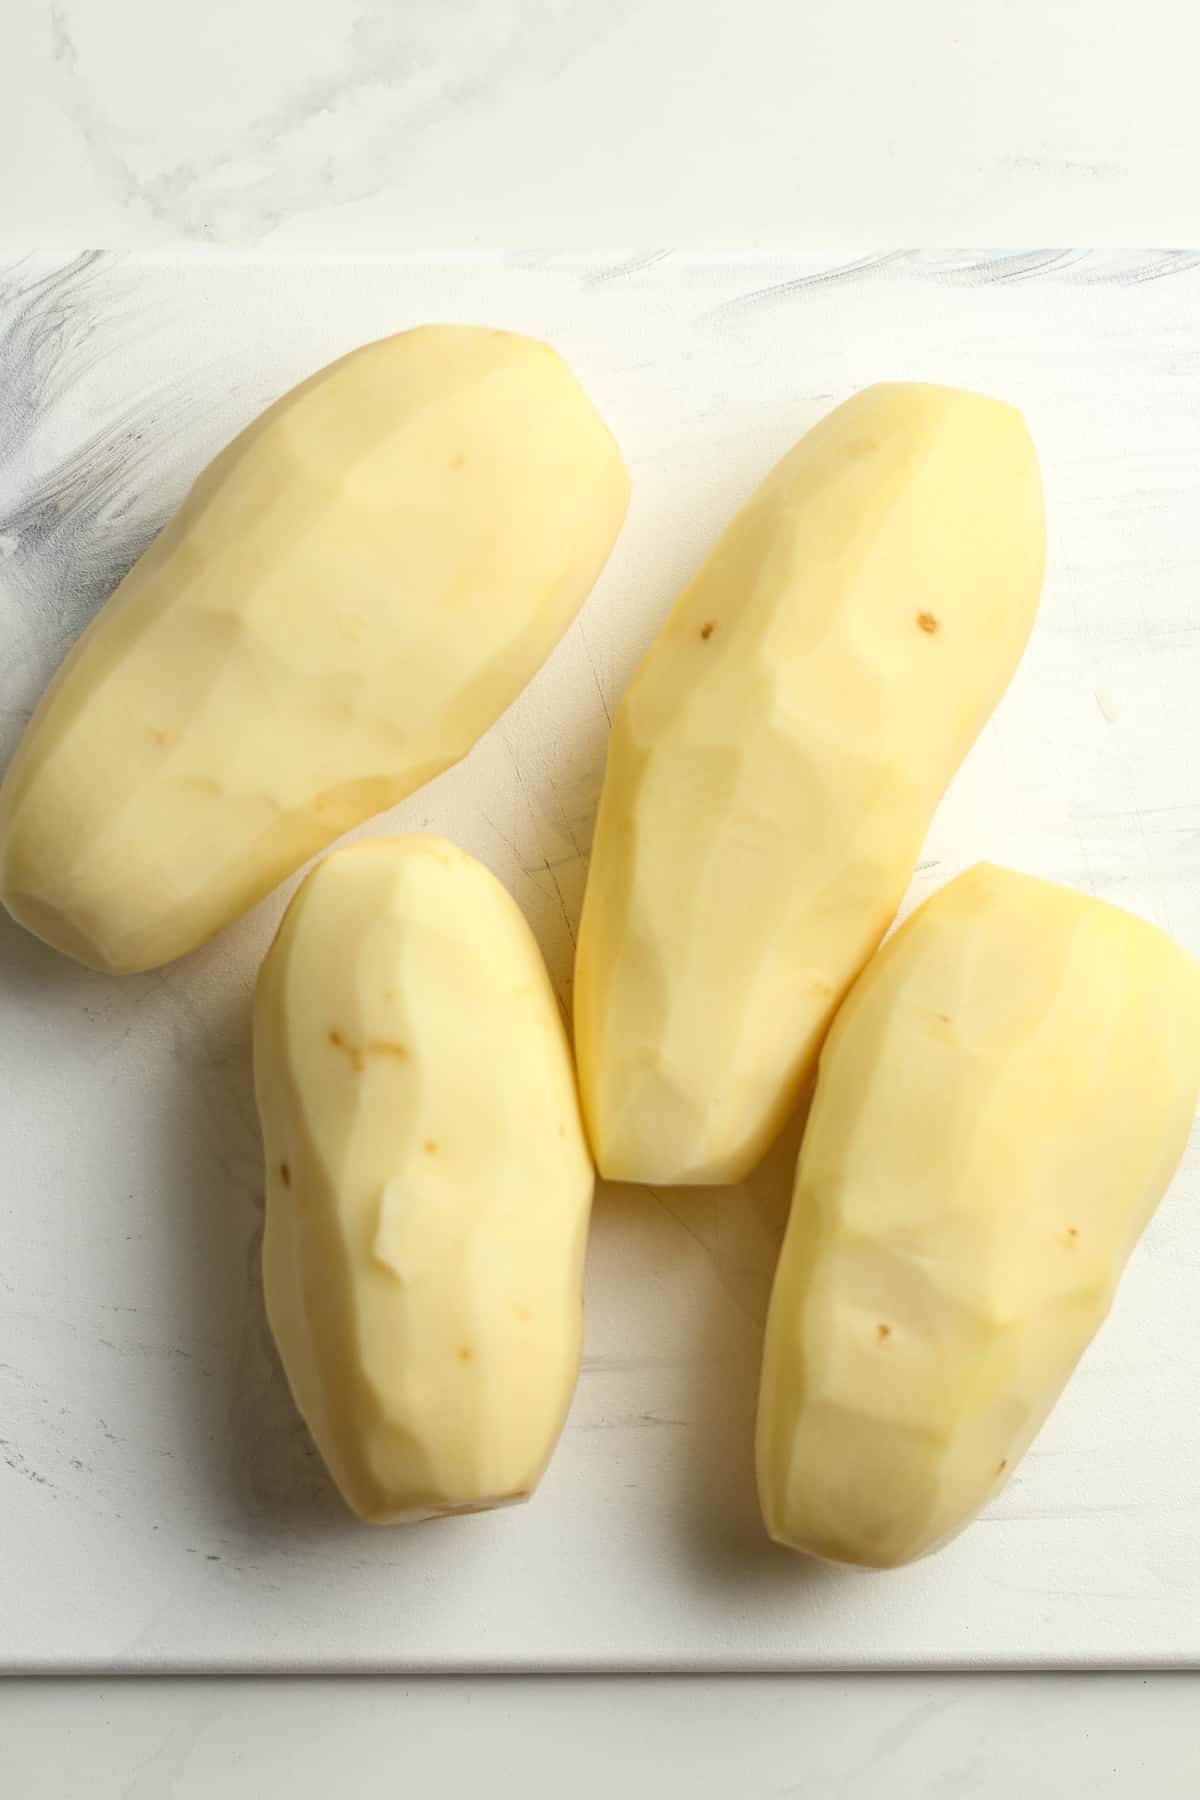 Four peeled potatoes.